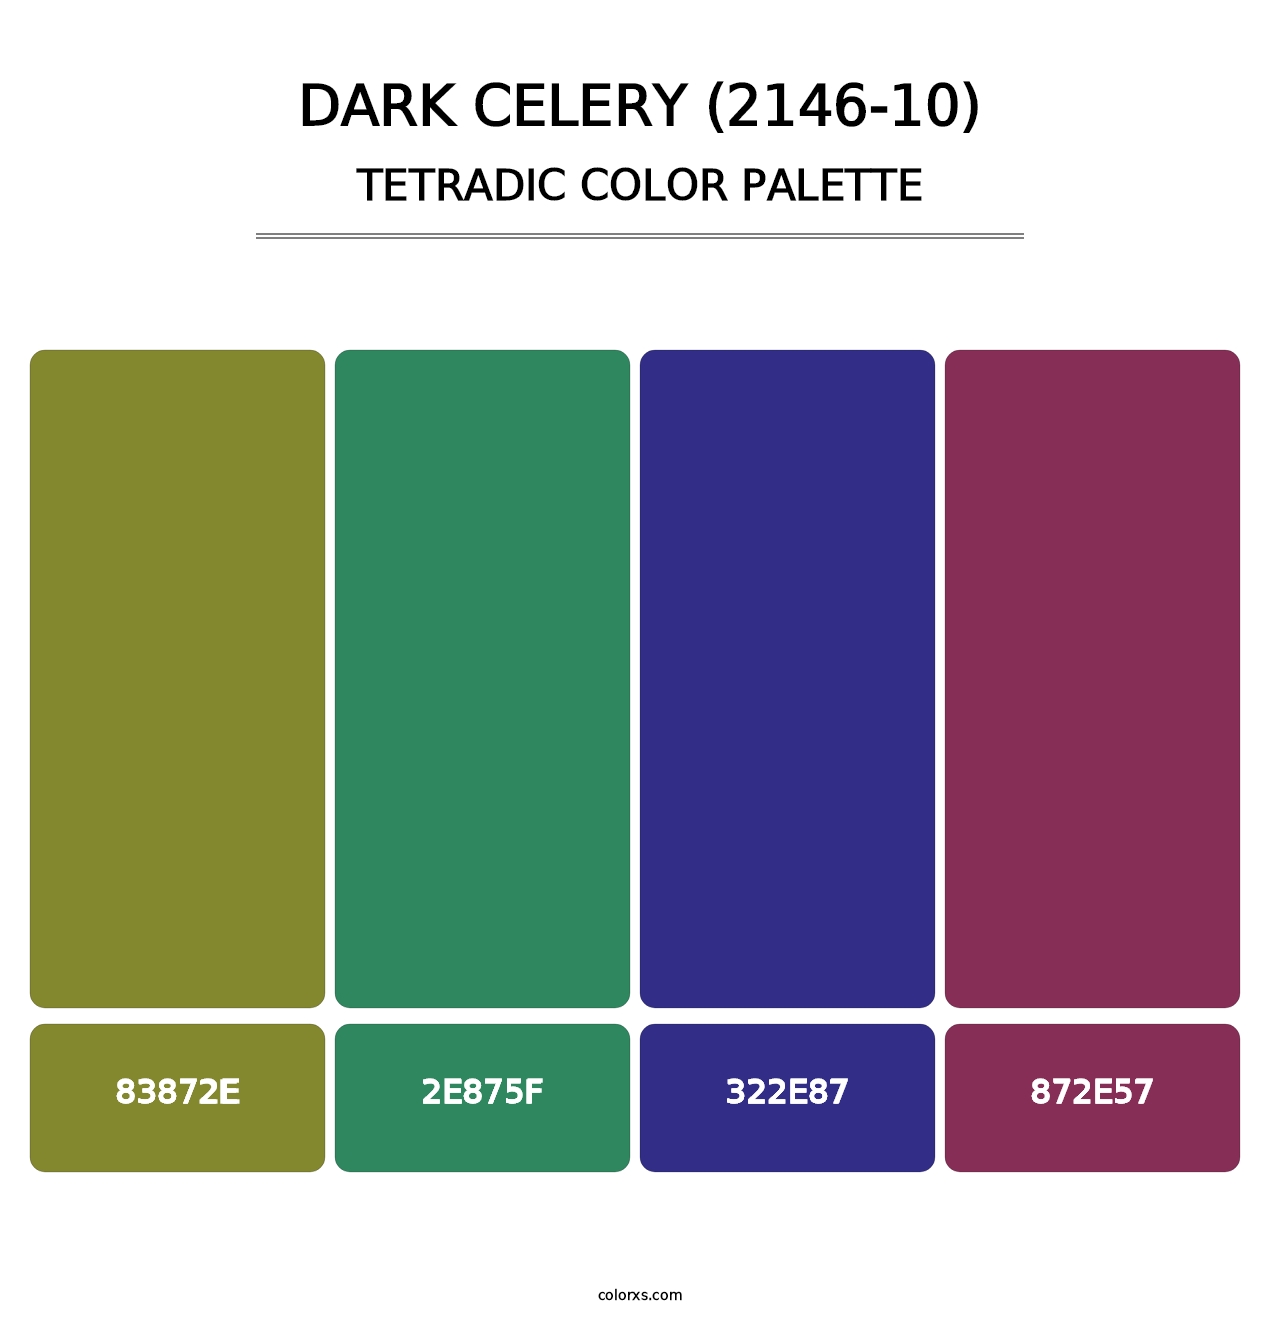 Dark Celery (2146-10) - Tetradic Color Palette